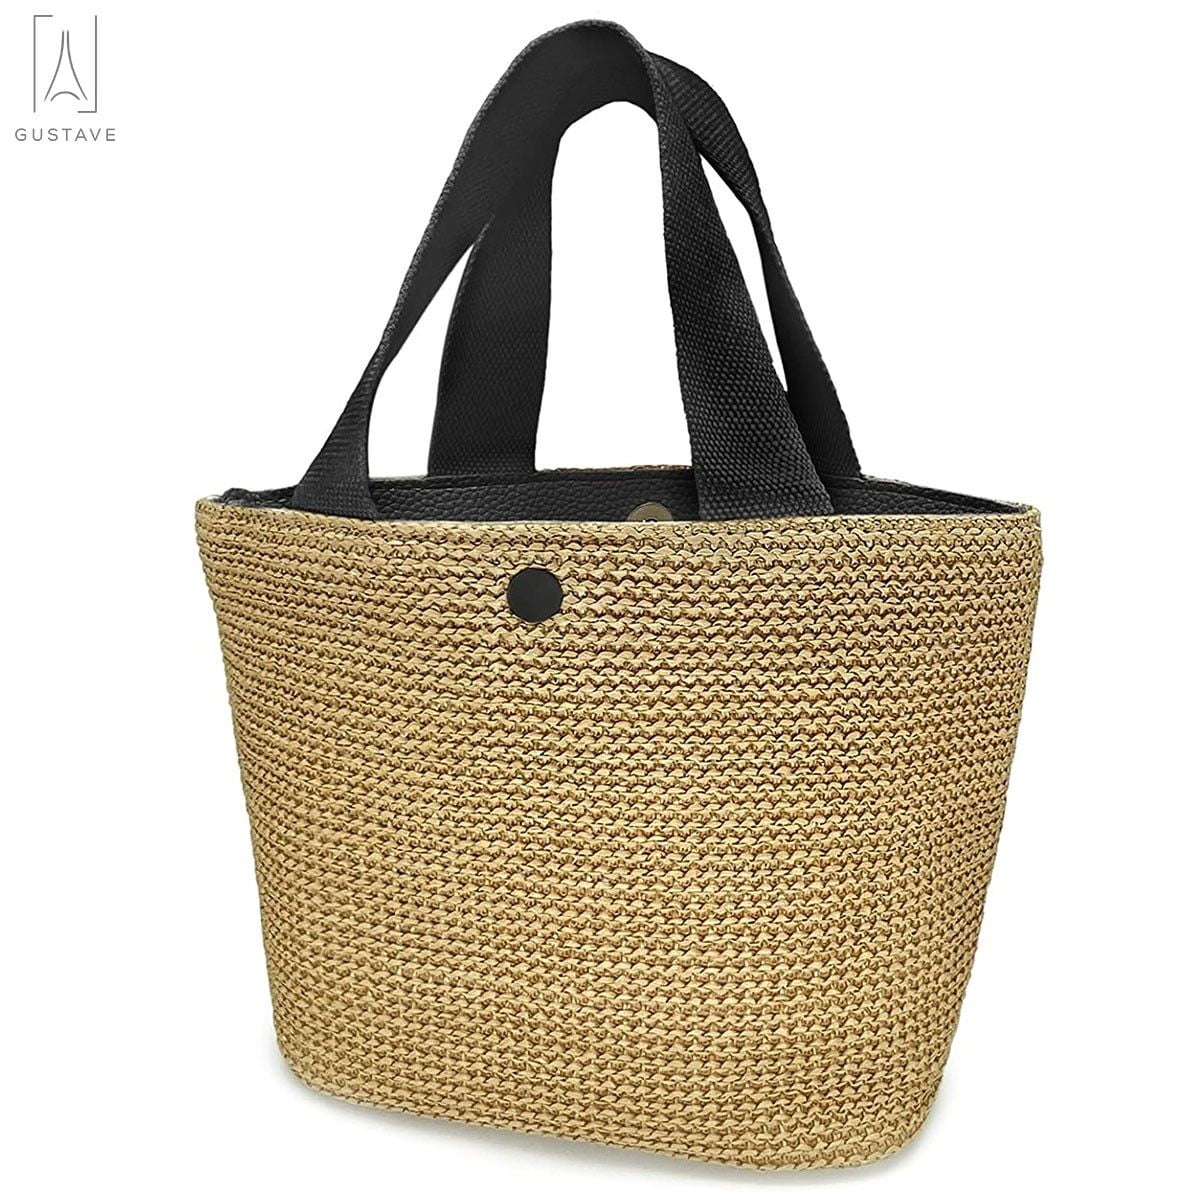 Gustave Women Straw Tote Bag Handbag with Handles Boho Summer Beach ...